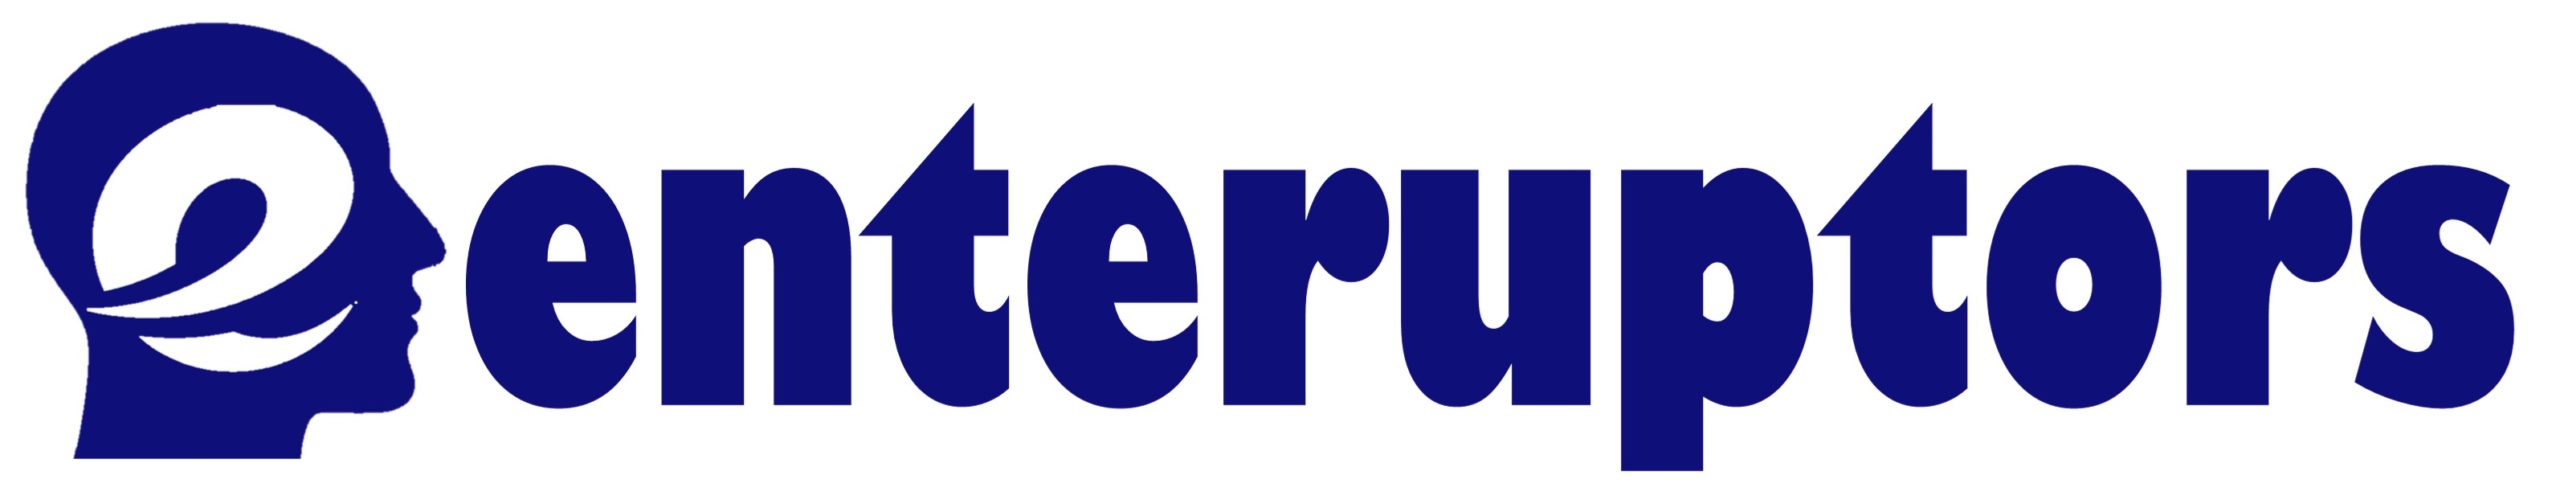 Enteruptors logo